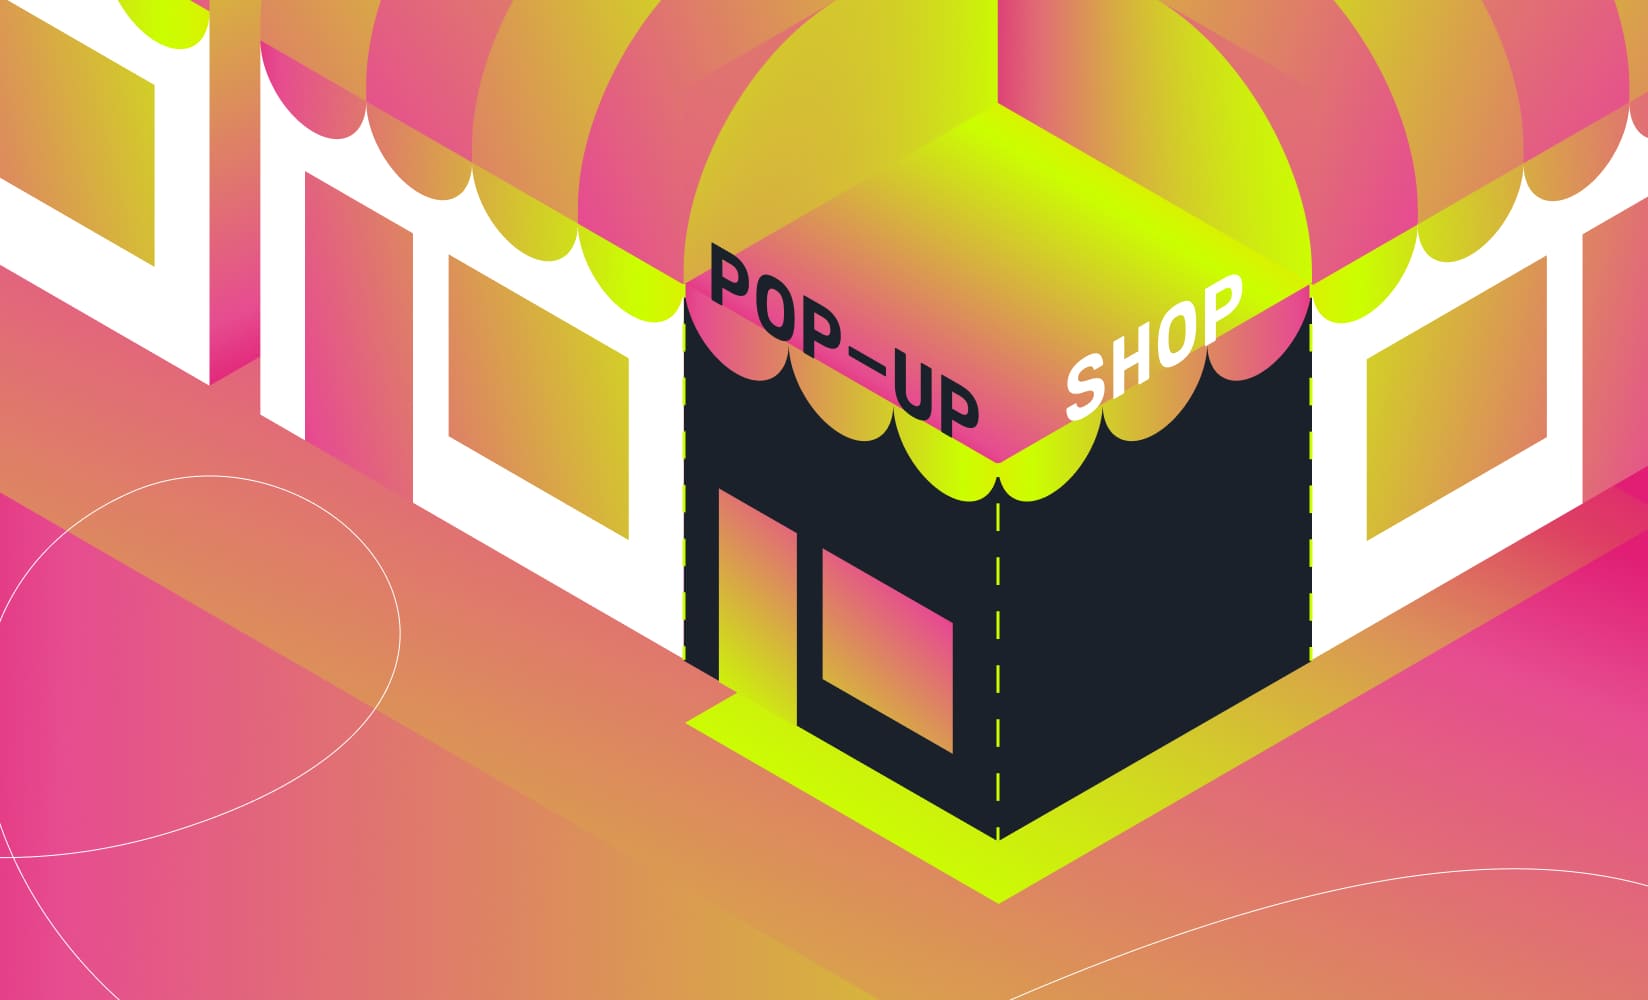 12 Creative Pop-Up Shop Ideas - Peerspace